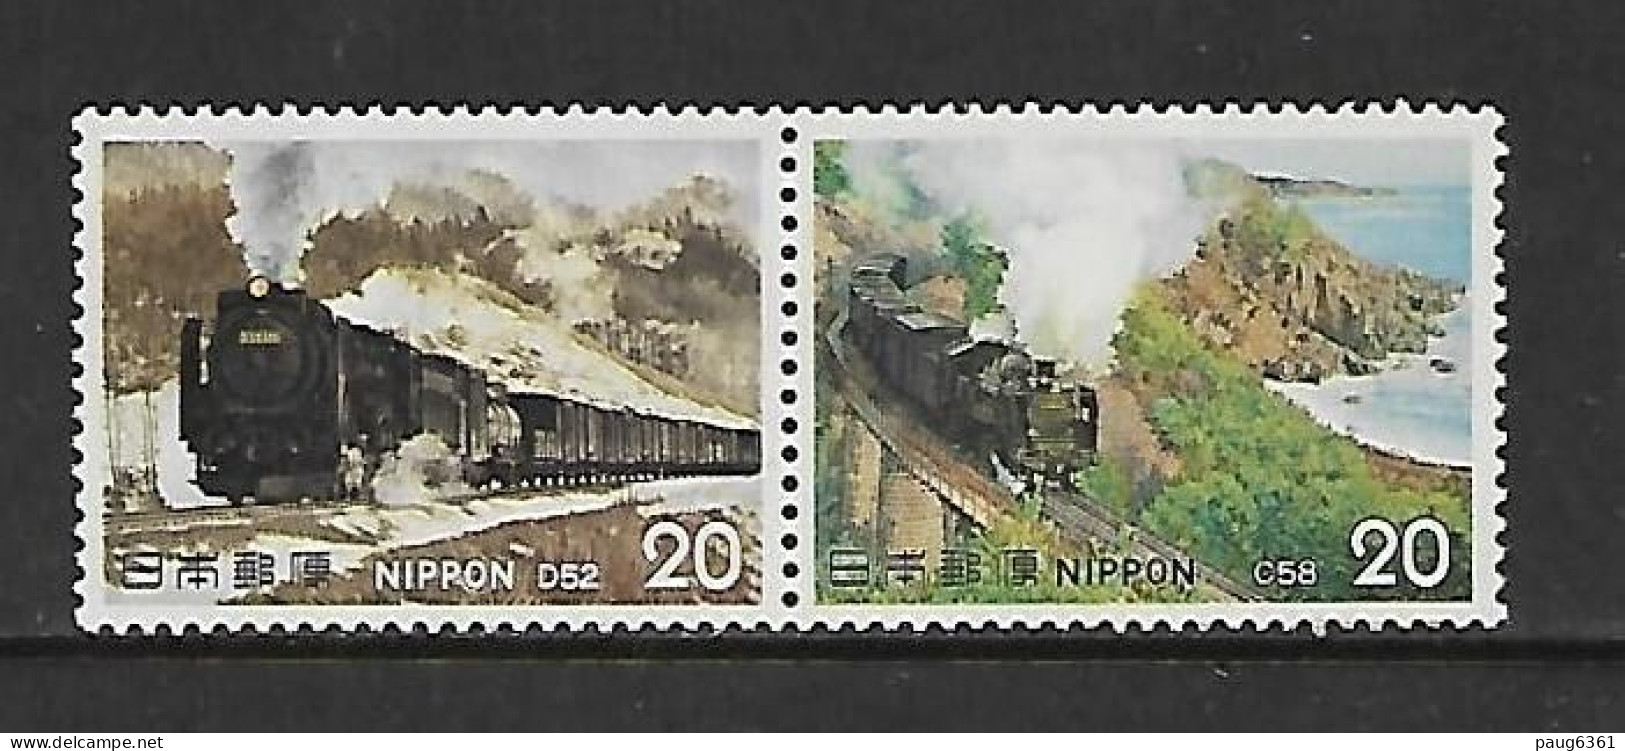 JAPON 1975 TRAINS YVERT N°1144/1145 NEUF MNH** - Trains